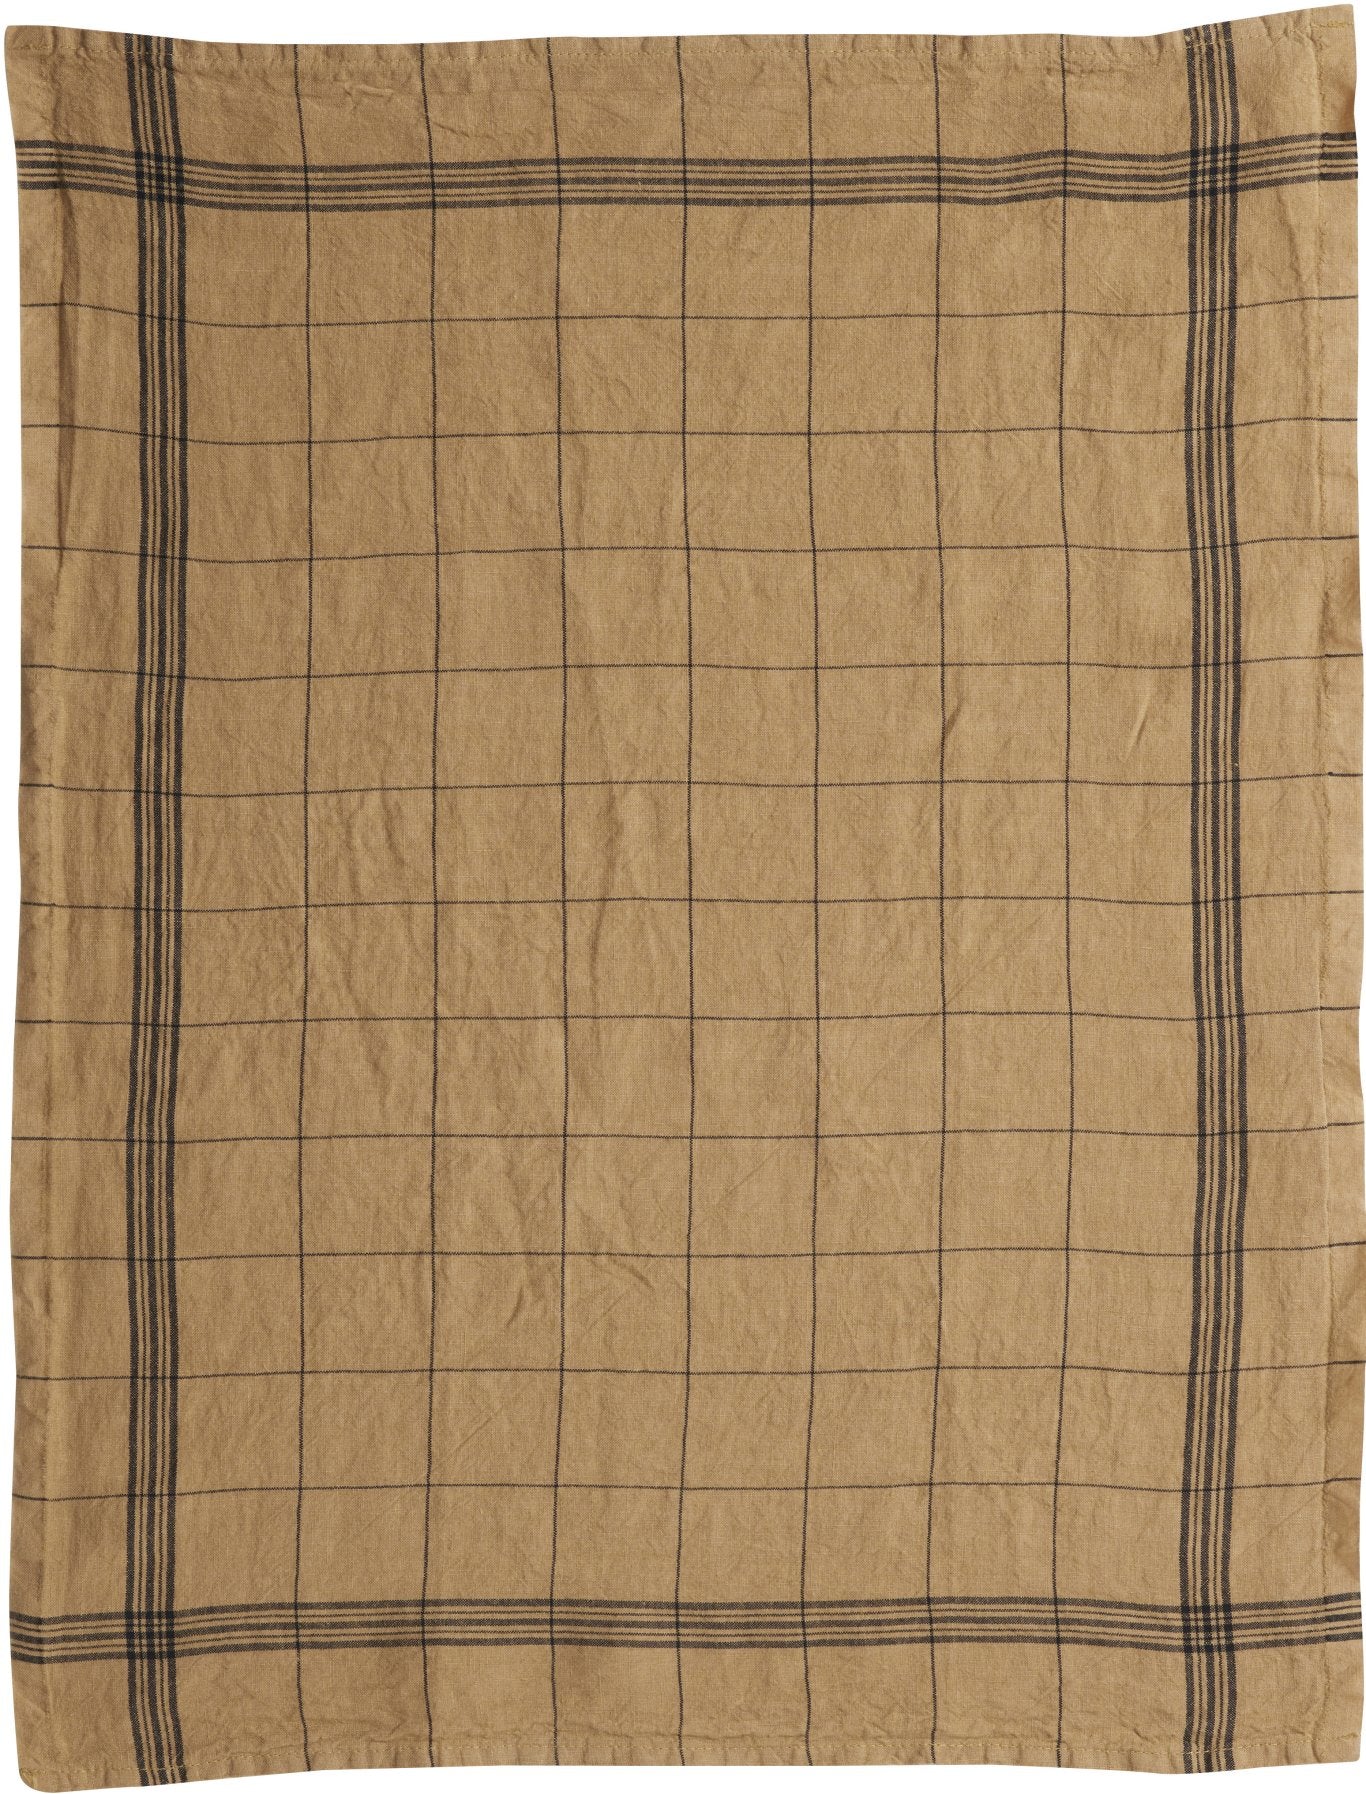 Charvet Editions "Bistro" (Bronze), Natural woven linen tea towel. Made in France.